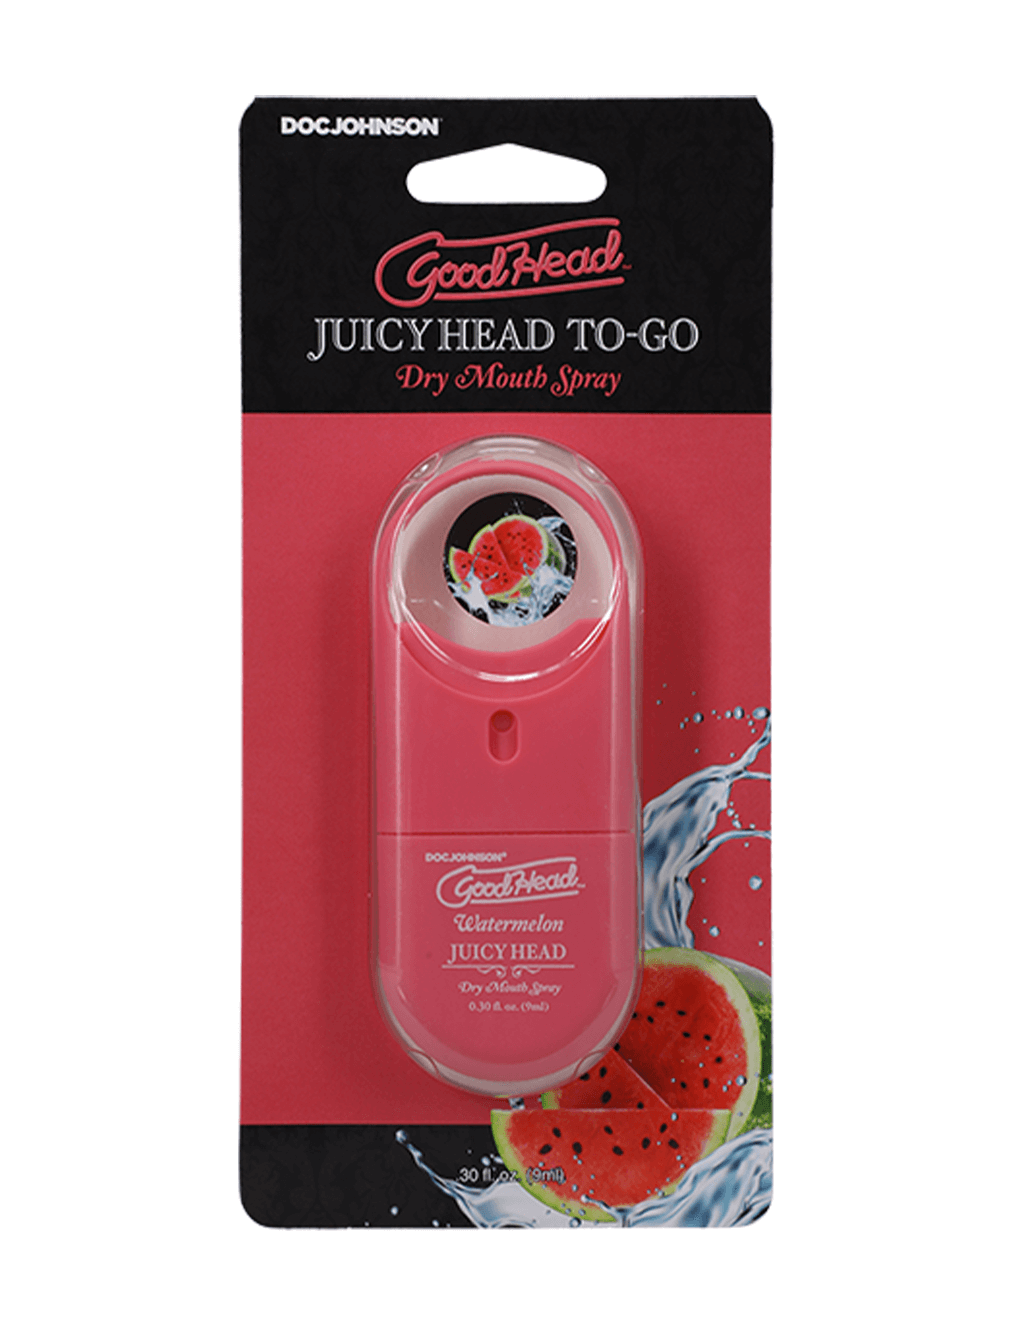 GoodHead Juicy Head To Go - Watermelon Package 